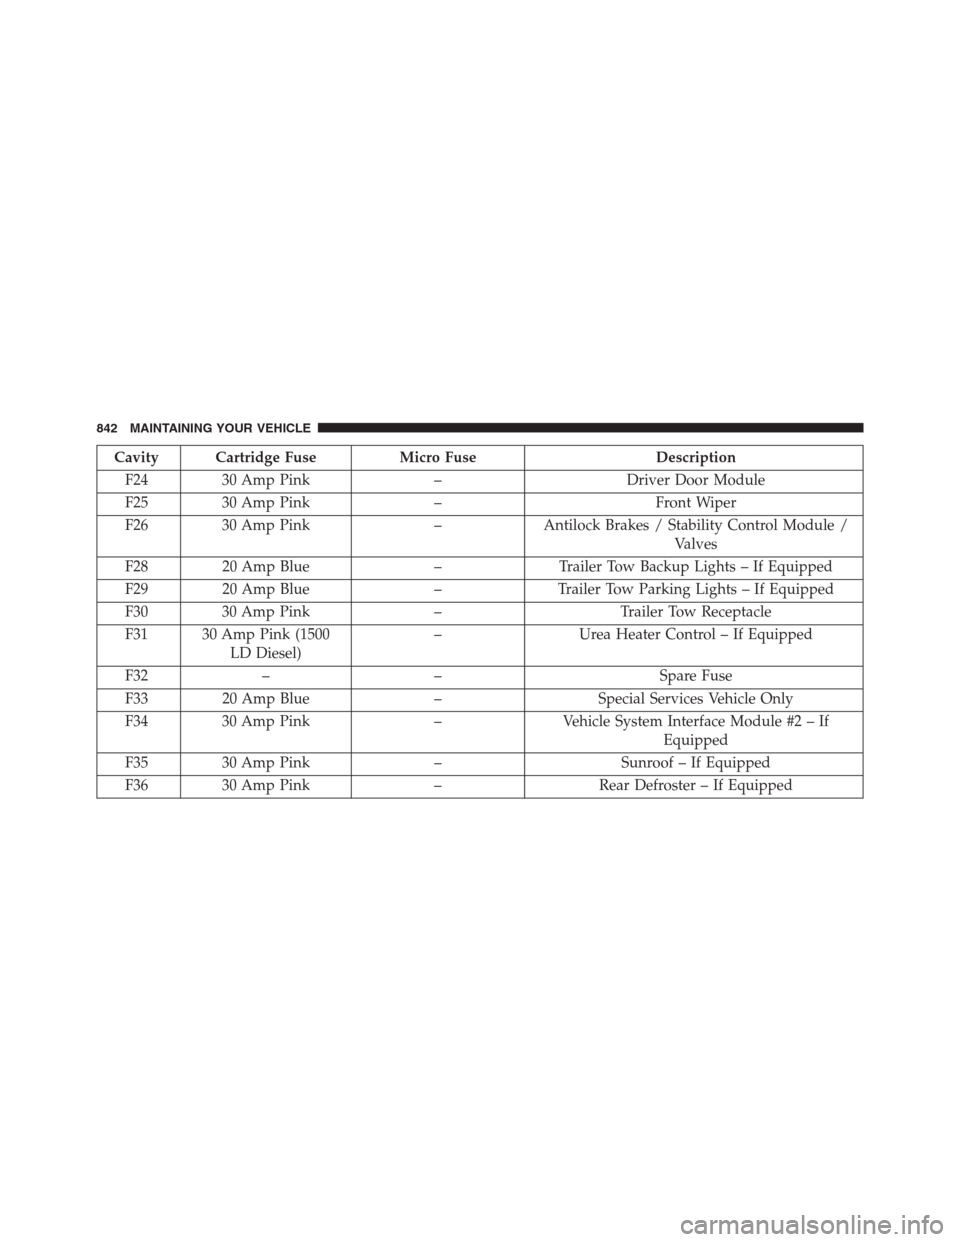 Ram 1500 2016 User Guide Cavity Cartridge Fuse Micro Fuse Description
F24 30 Amp Pink – Driver Door Module
F25 30 Amp Pink – Front Wiper
F26 30 Amp Pink – Antilock Brakes / Stability Control Module /
Valves
F28 20 Amp B